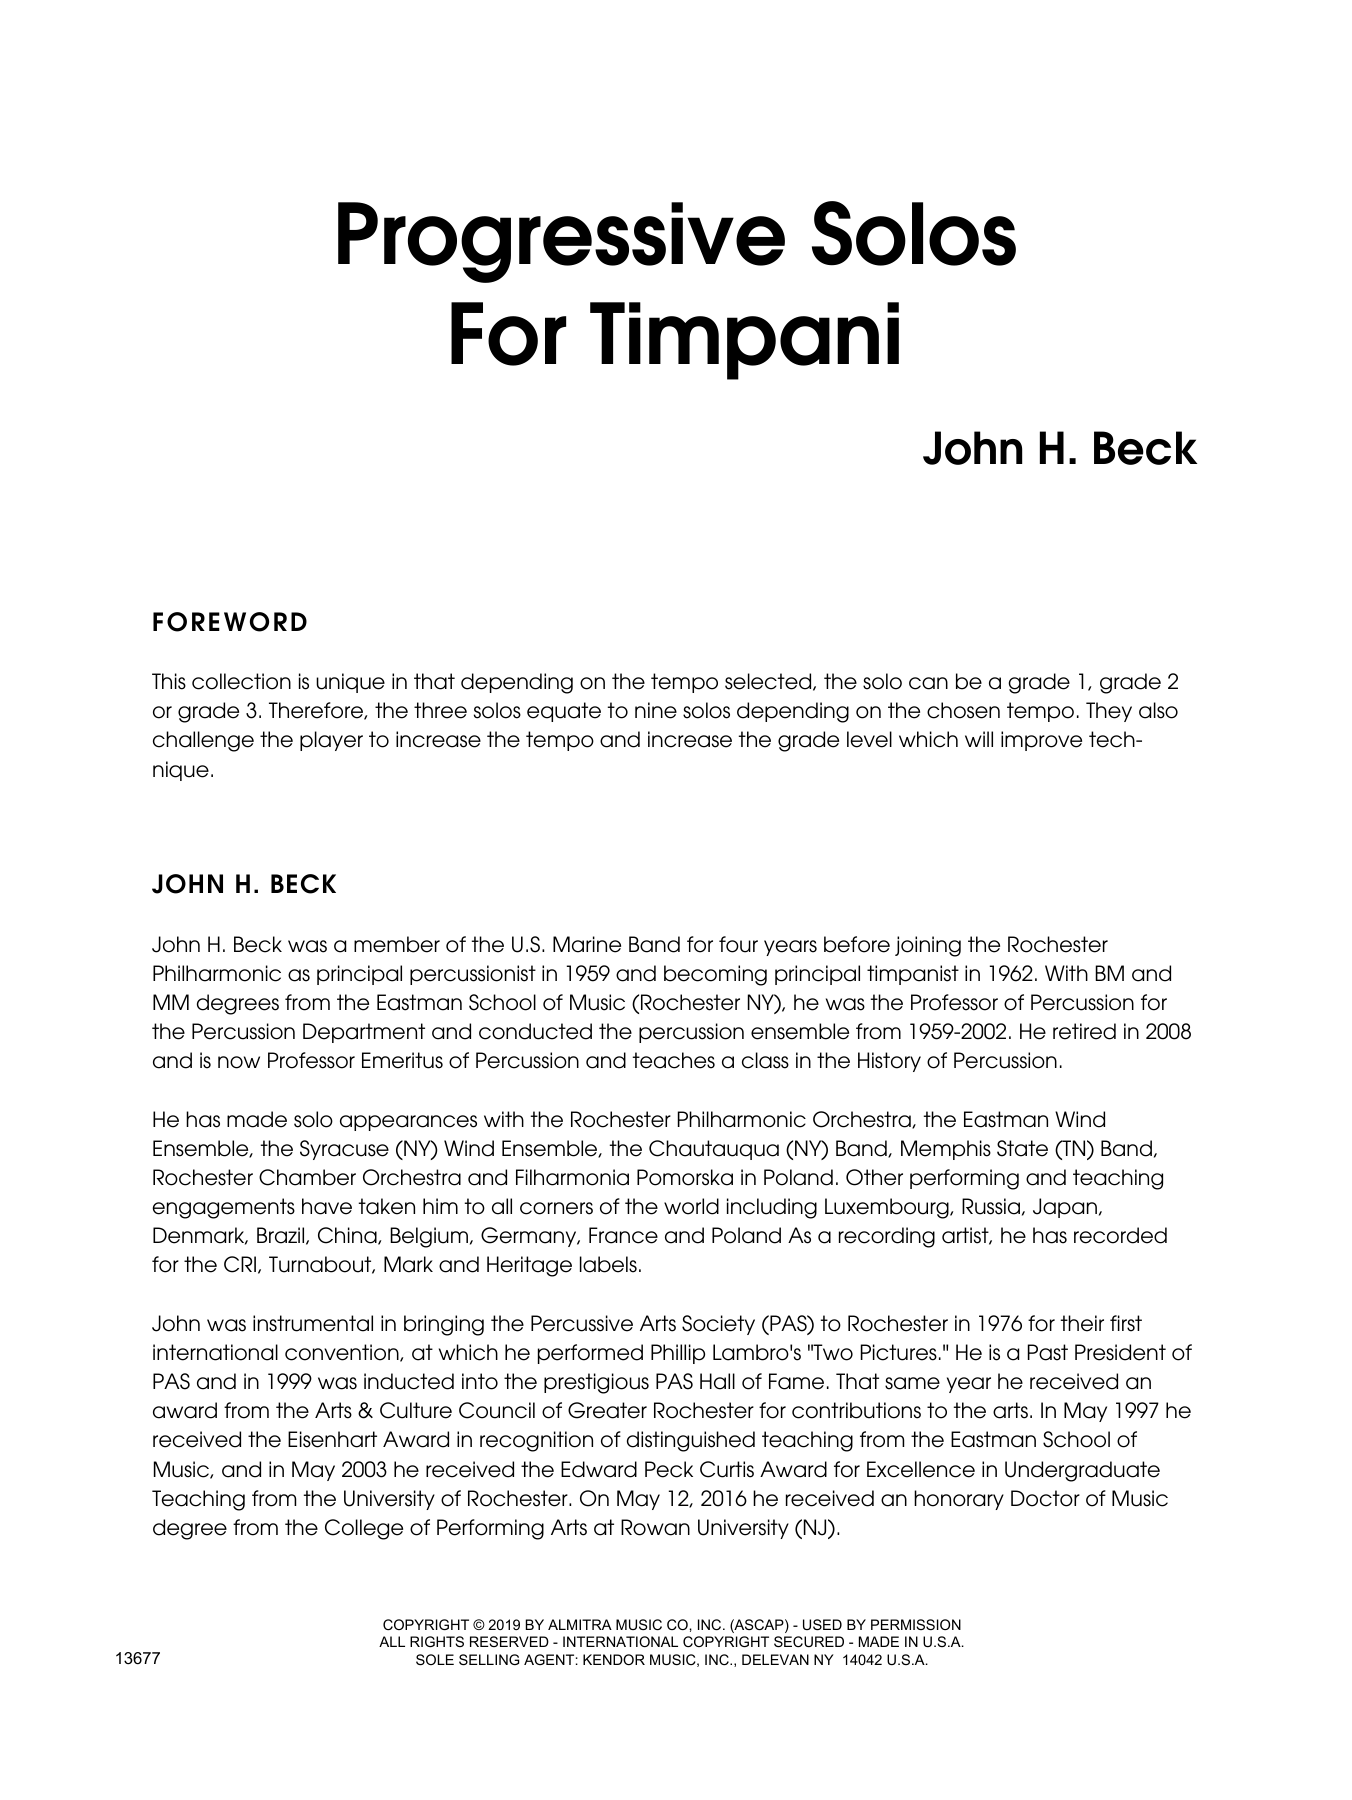 Download John H. Beck Progressive Solos For Timpani Sheet Music